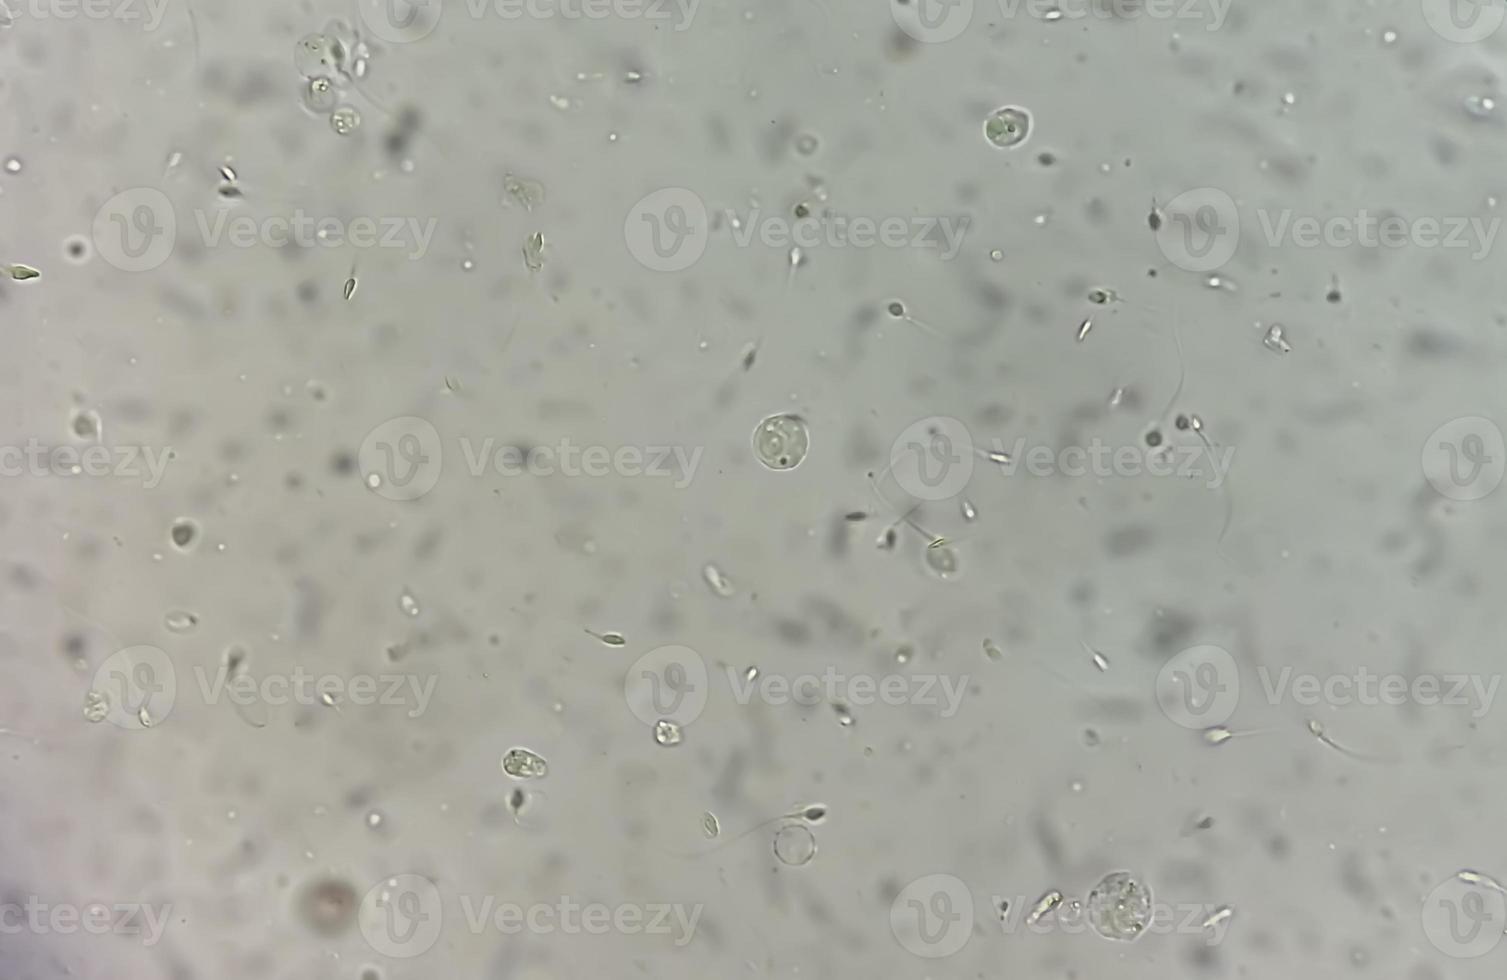 análisis de semen bajo microscopía que muestra piospermia o leucocitospermia. análisis de esperma foto